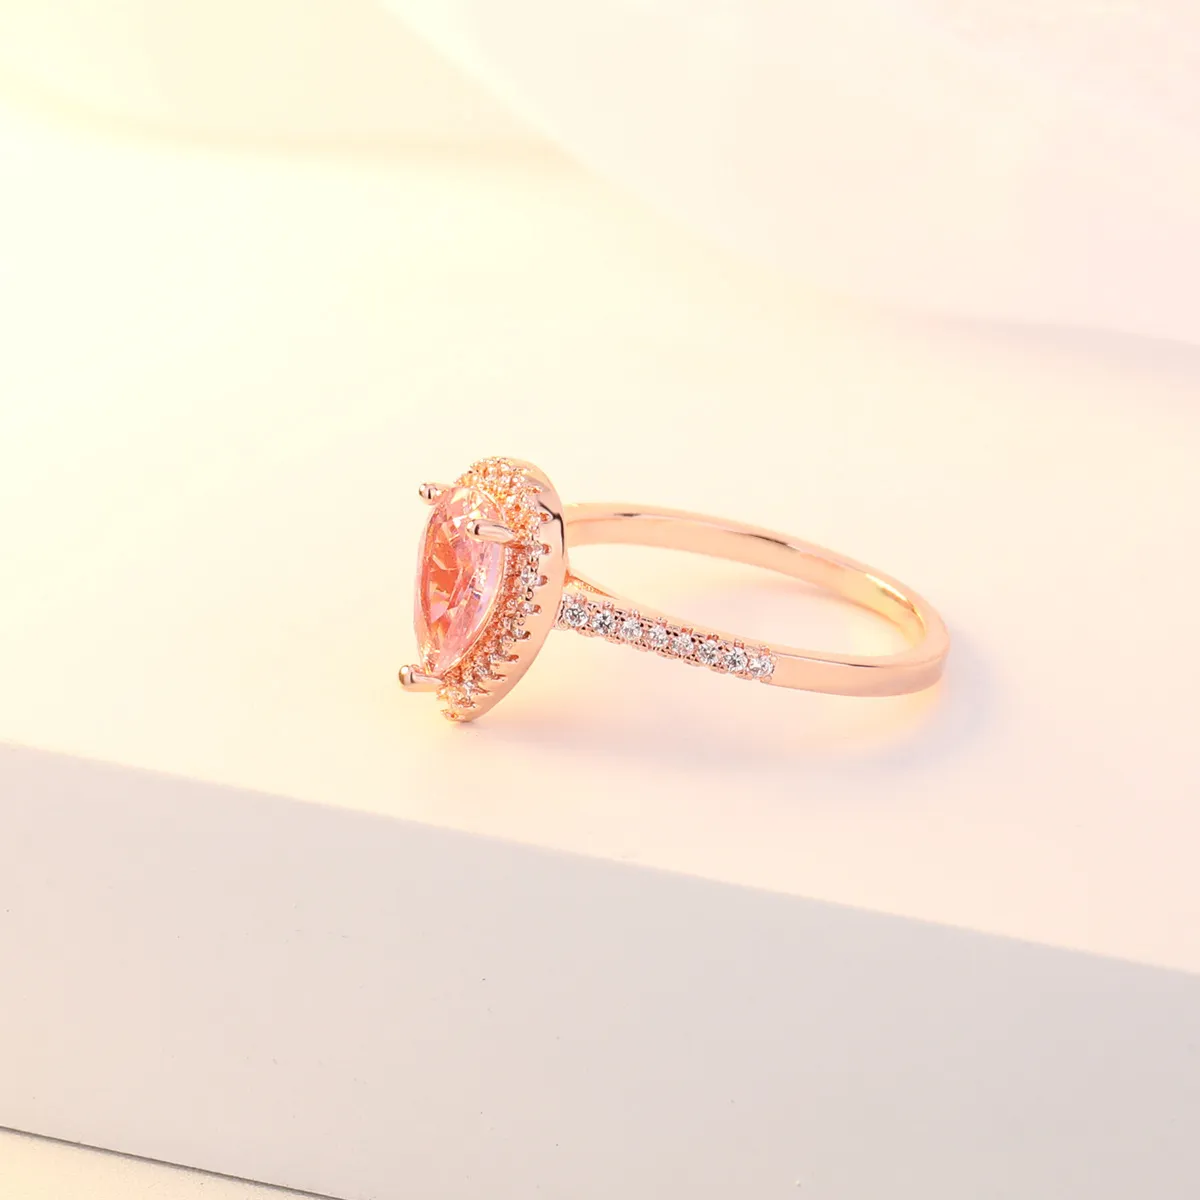 OMHXZJ toda la moda europea mujer chica fiesta regalo de boda gota de agua circonita blanca rosa anillo de oro rosa de 18 quilates RR5983400836